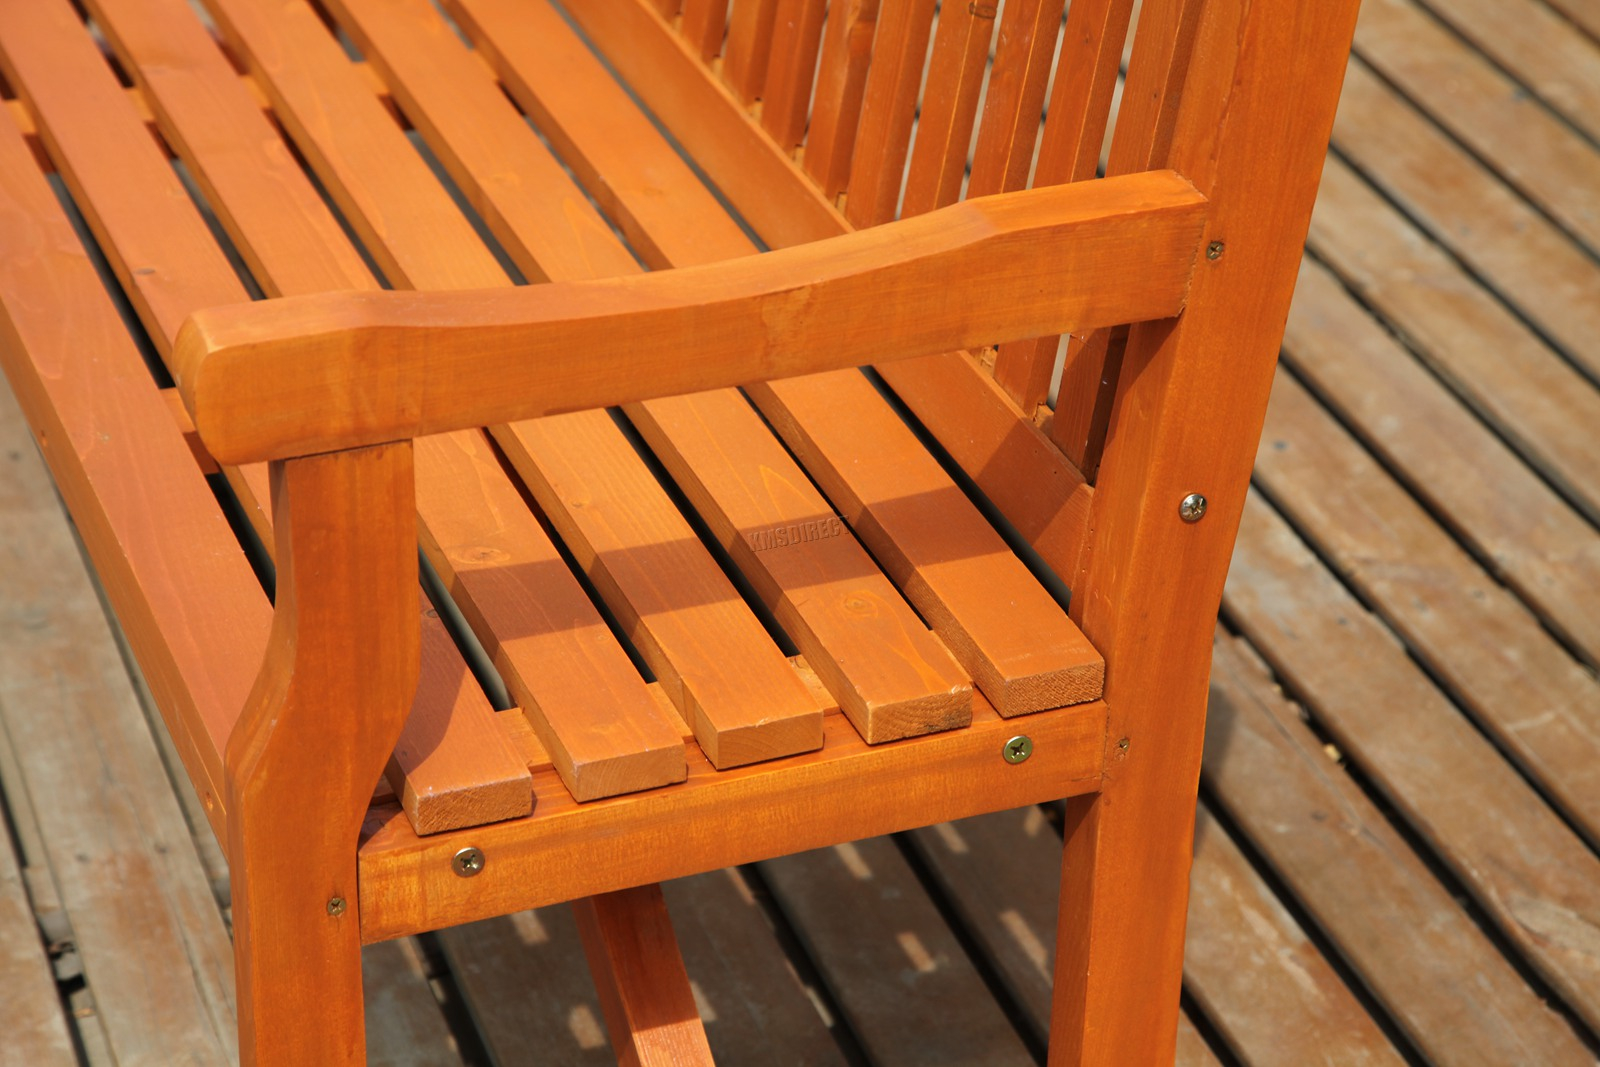 BIRCHTREE Garden Bench 3 Seater Chair Wood Patio Deck Patio Park Outdoor WGB02